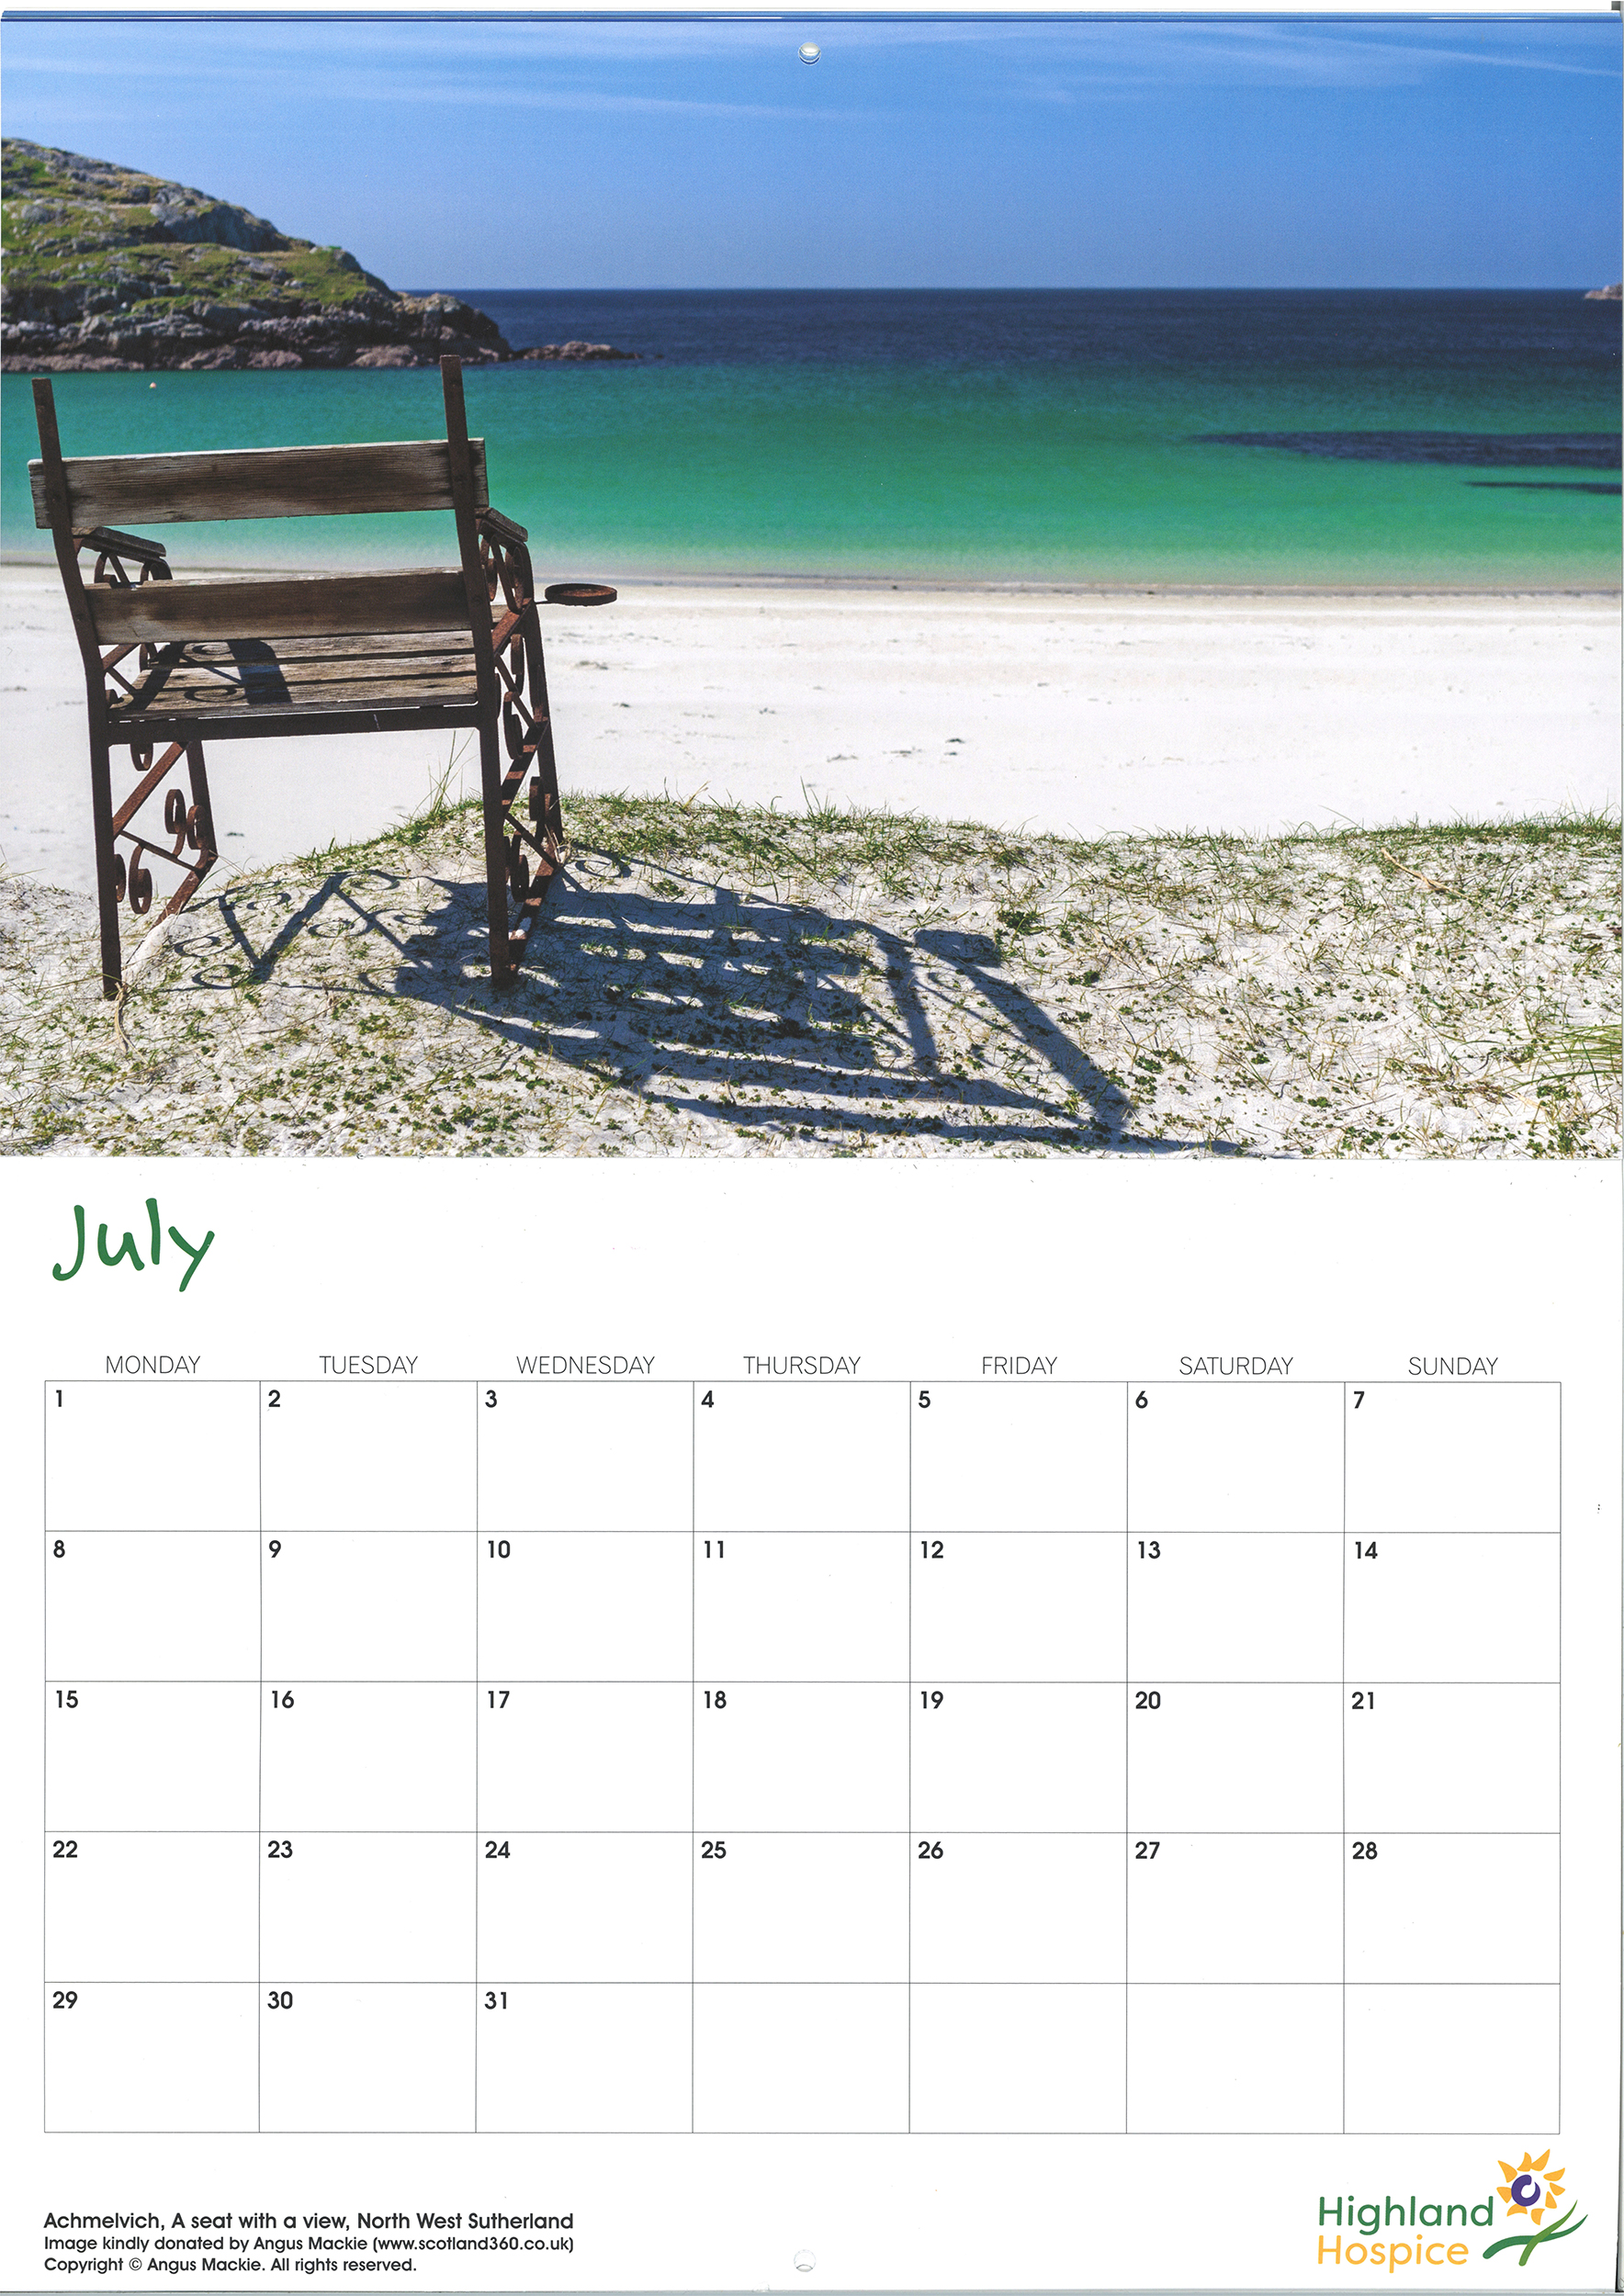 Highland Hospice 2019 Calendar _Front Page